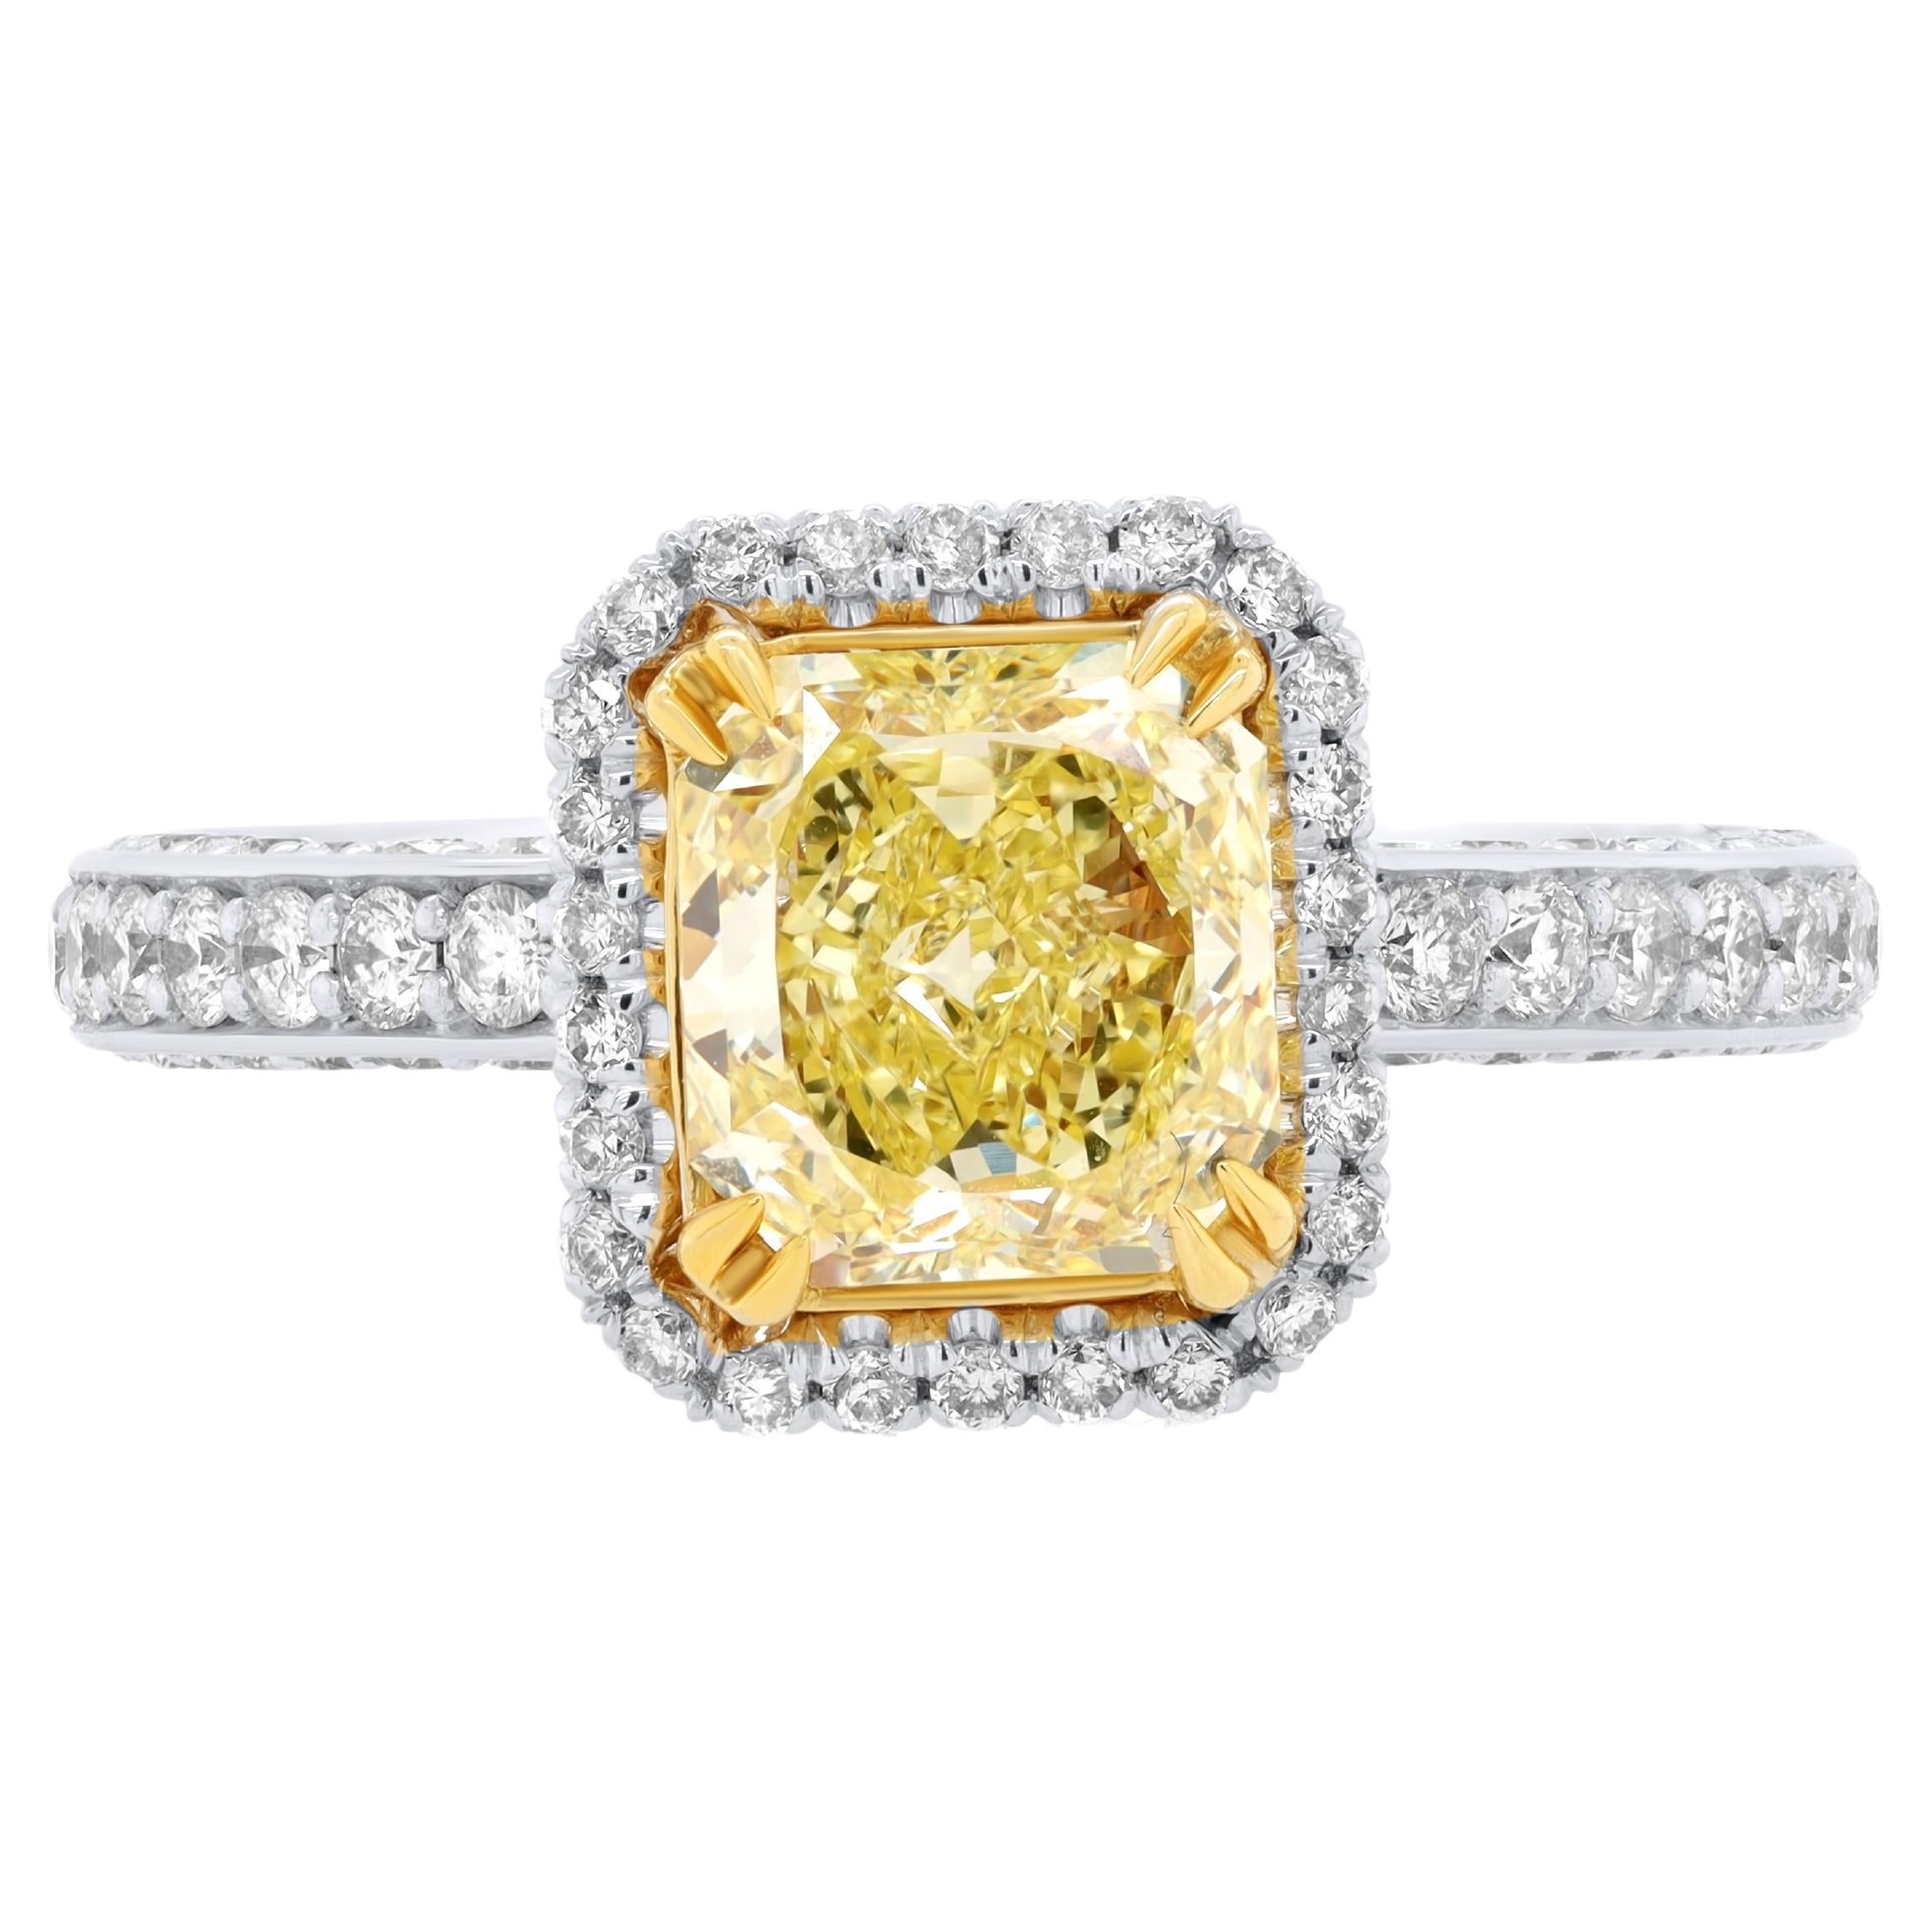 Diana M.  1.39 ct GIA certified (FIY VS2) fancy intense yellow radient diamond  For Sale